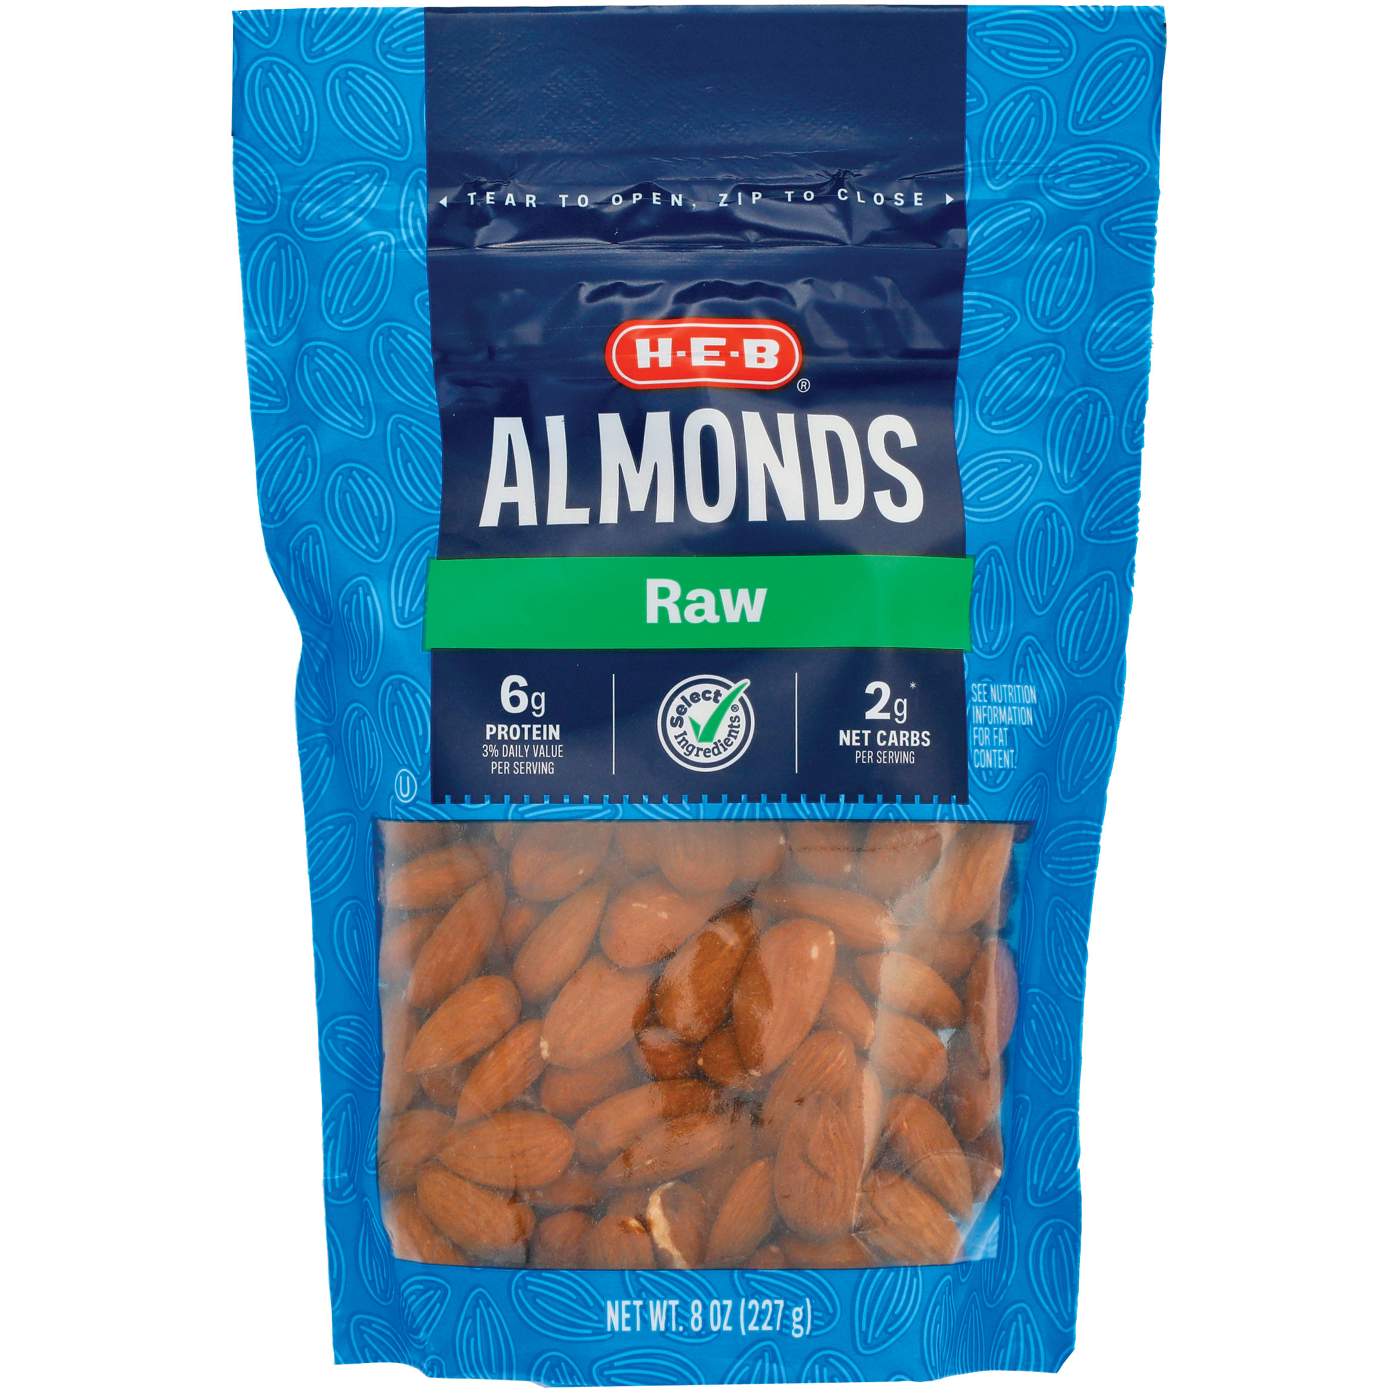 H-E-B Whole Raw Almonds; image 1 of 3